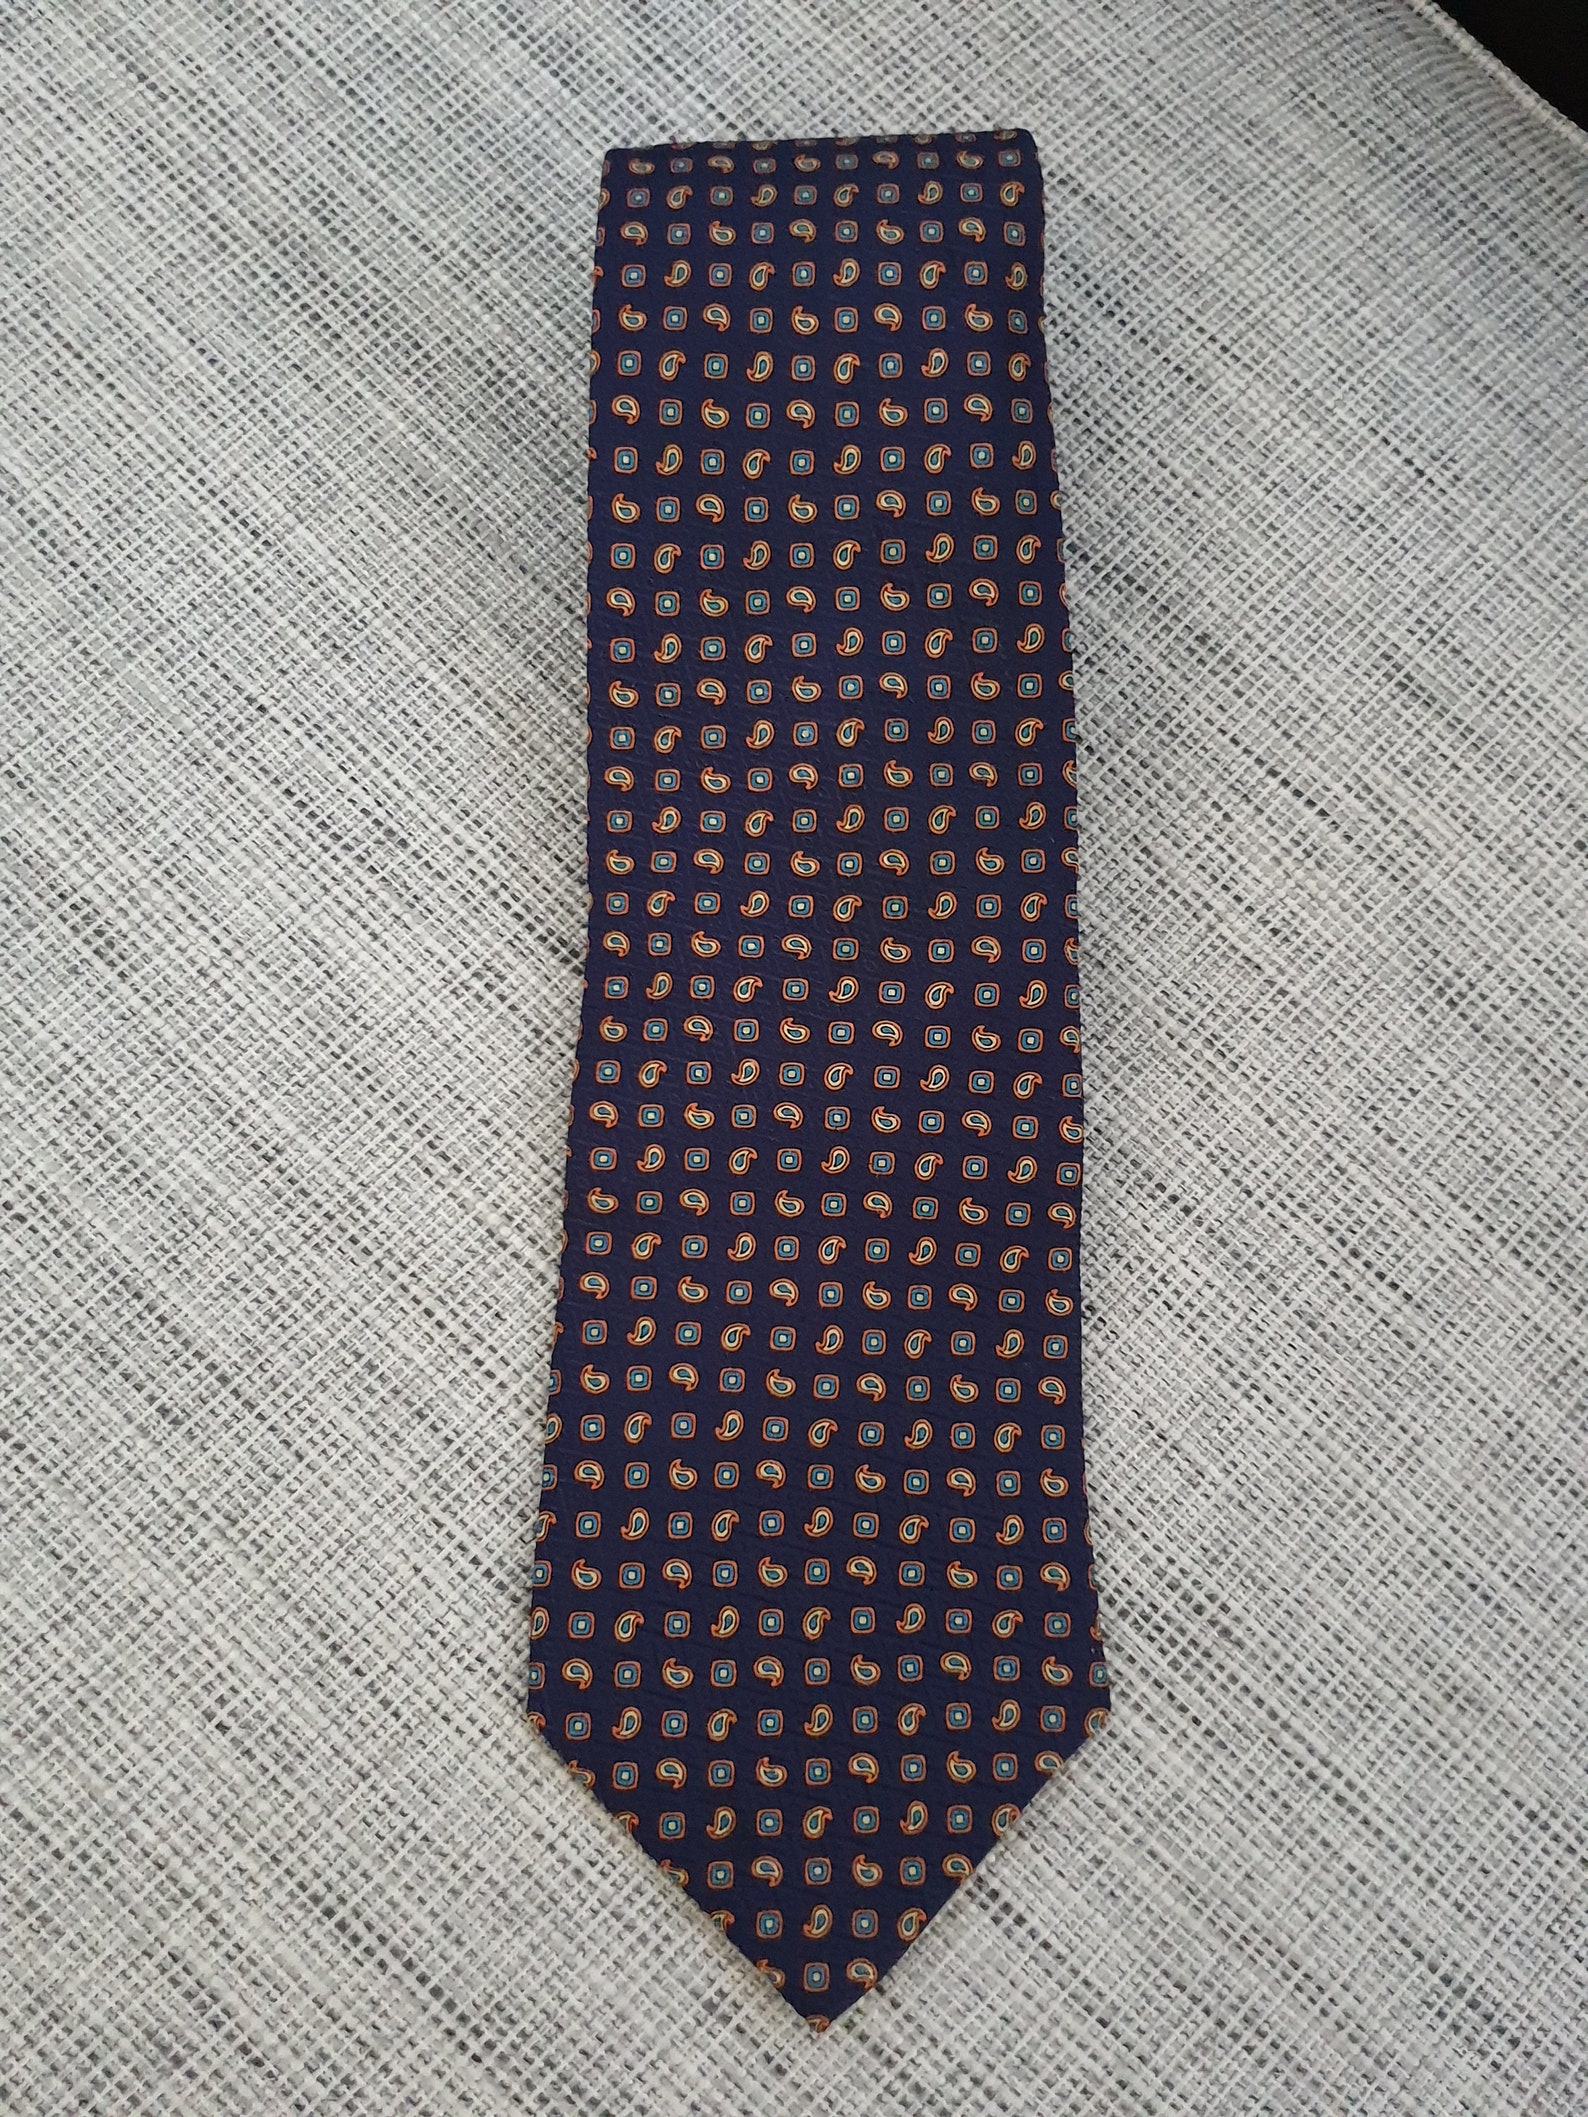 Exquisite Vintage tie Bruno Zanardi of Italy Silk necktie tie | Etsy